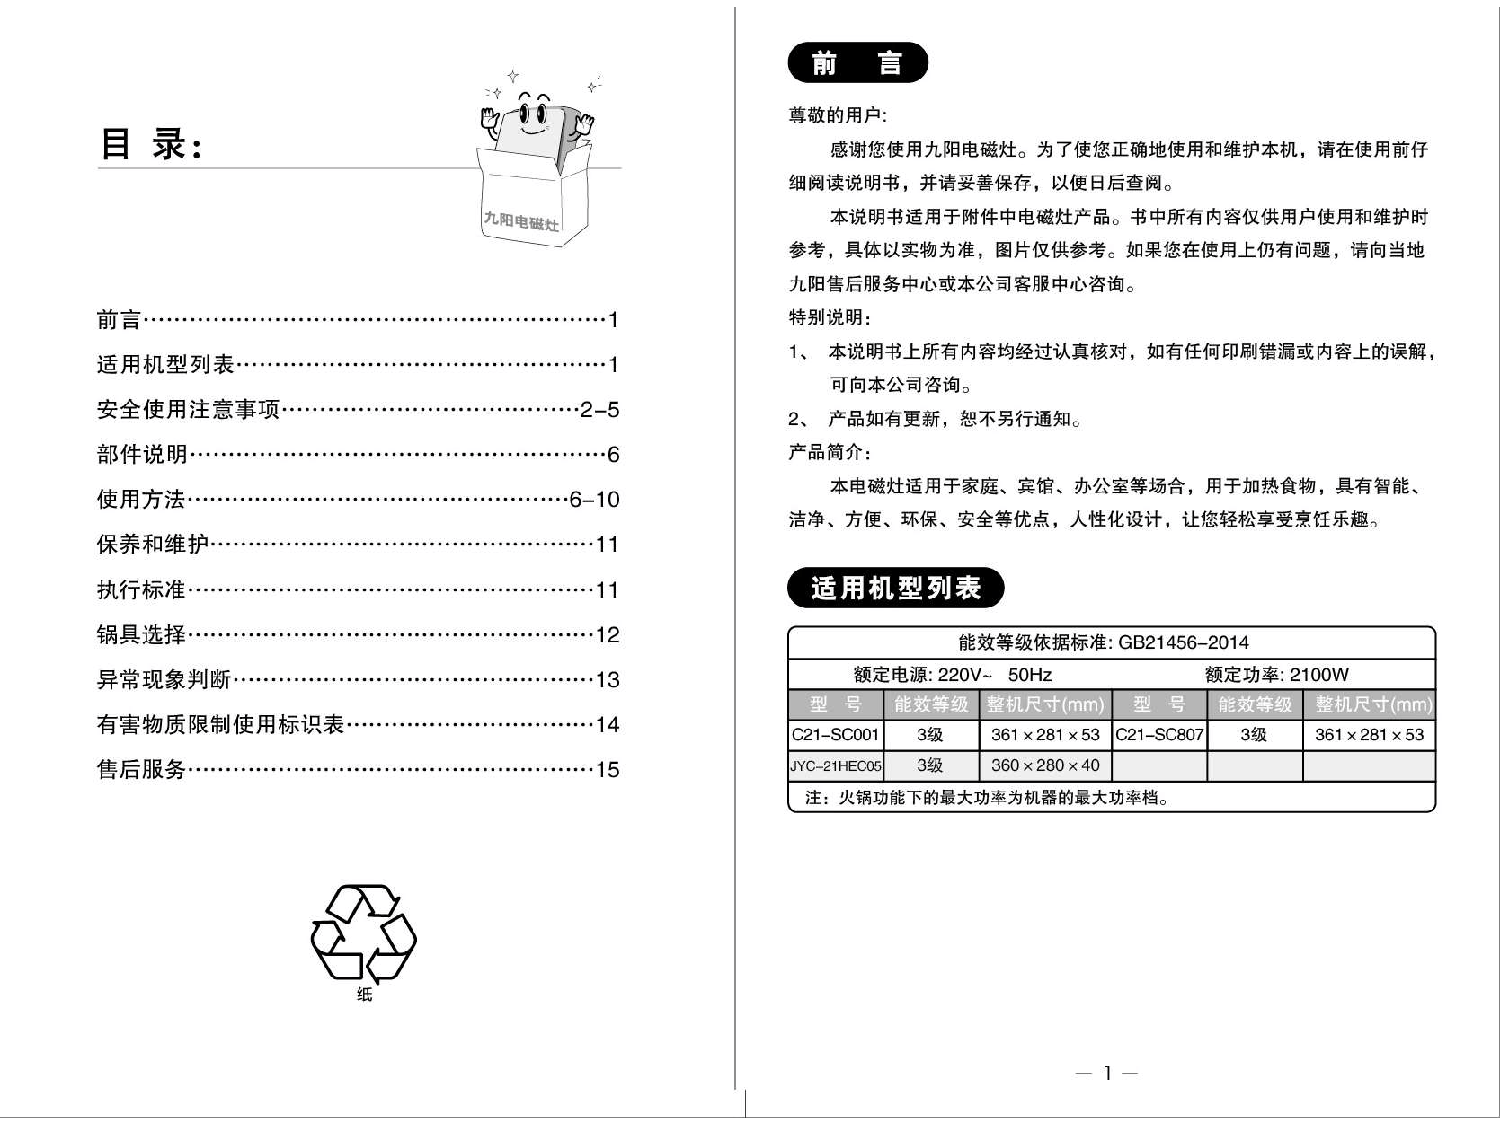 九阳 Joyyoung C21-SC001, JYC-21HEC05 使用说明书 第1页